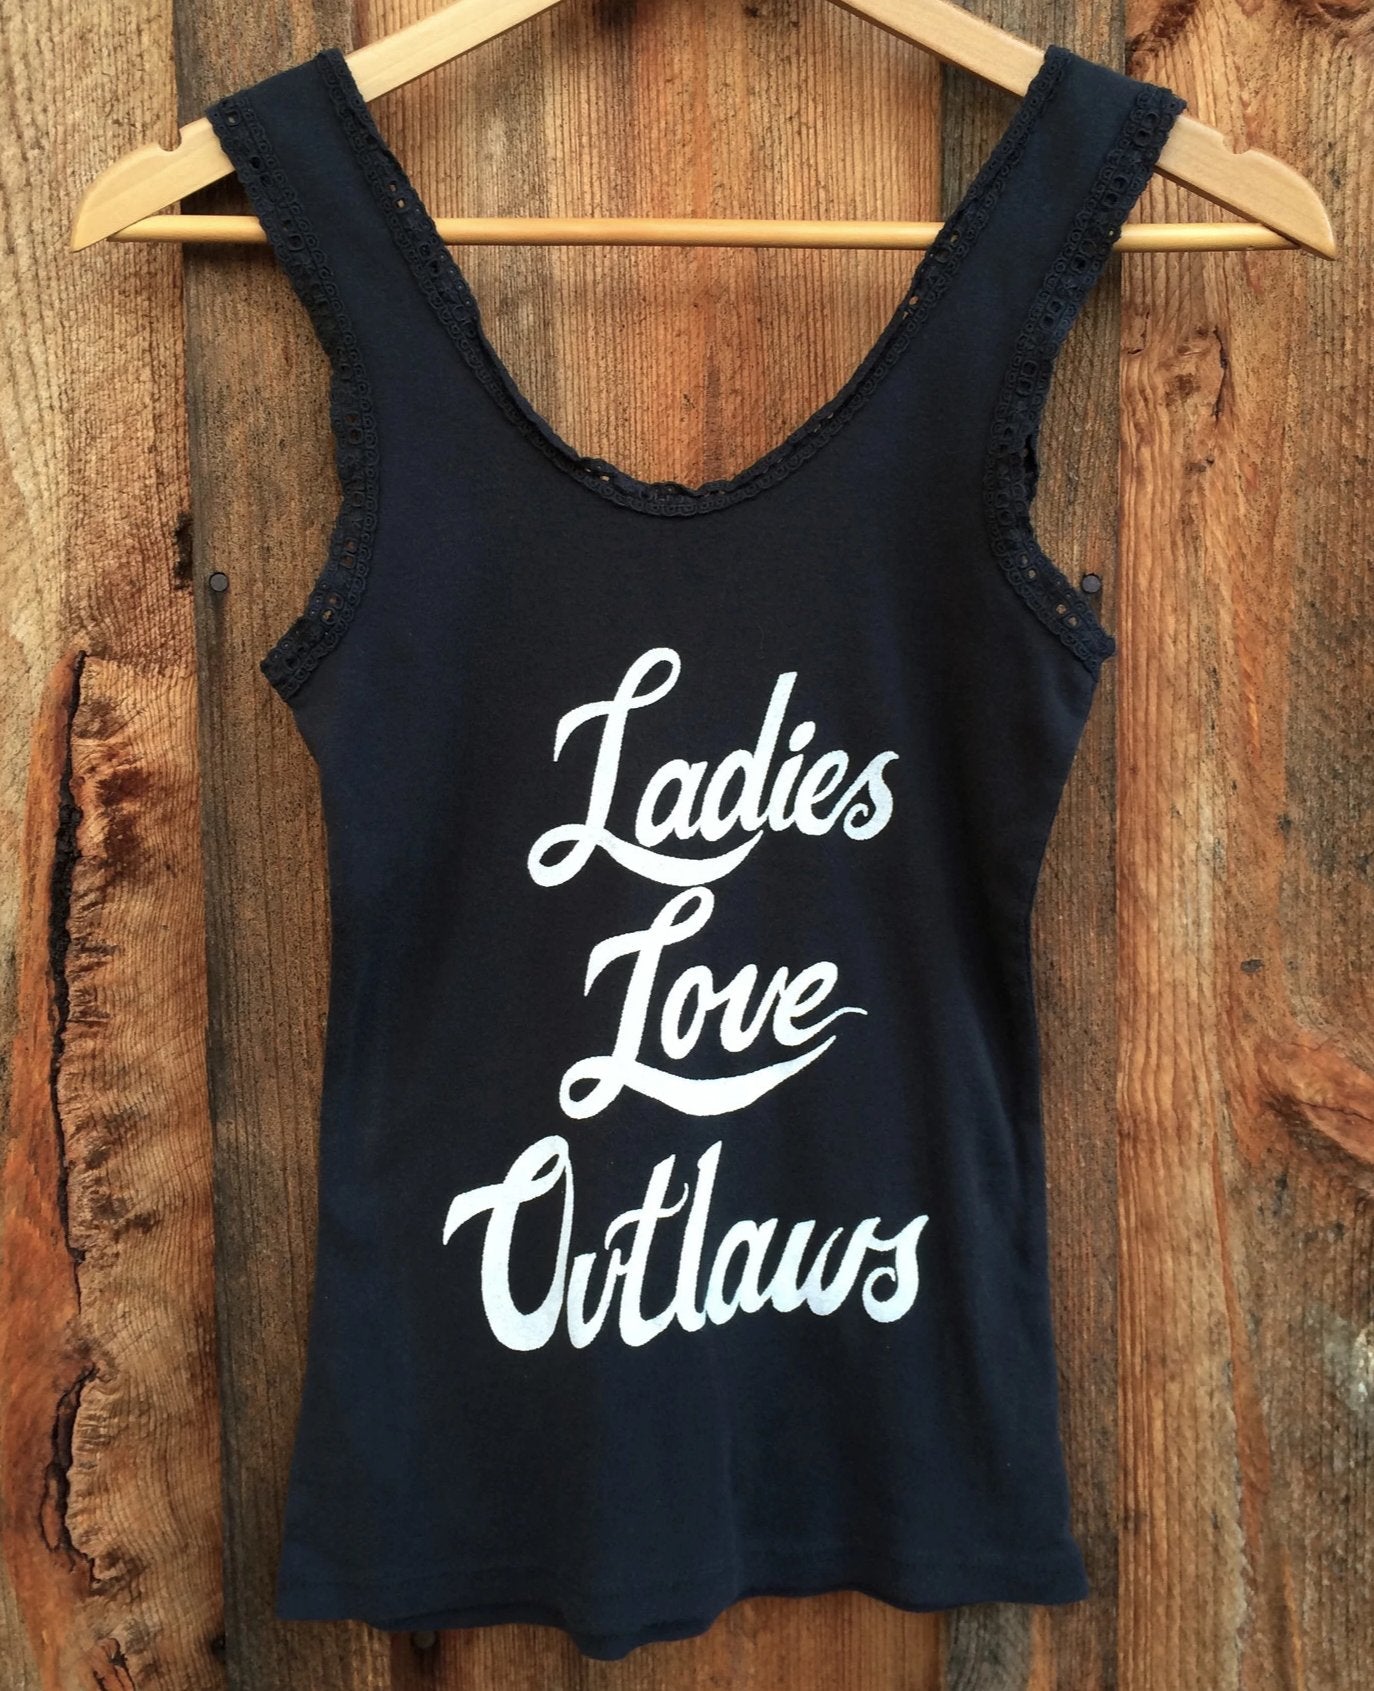 Outlaws - Ladies Endeavor Tank